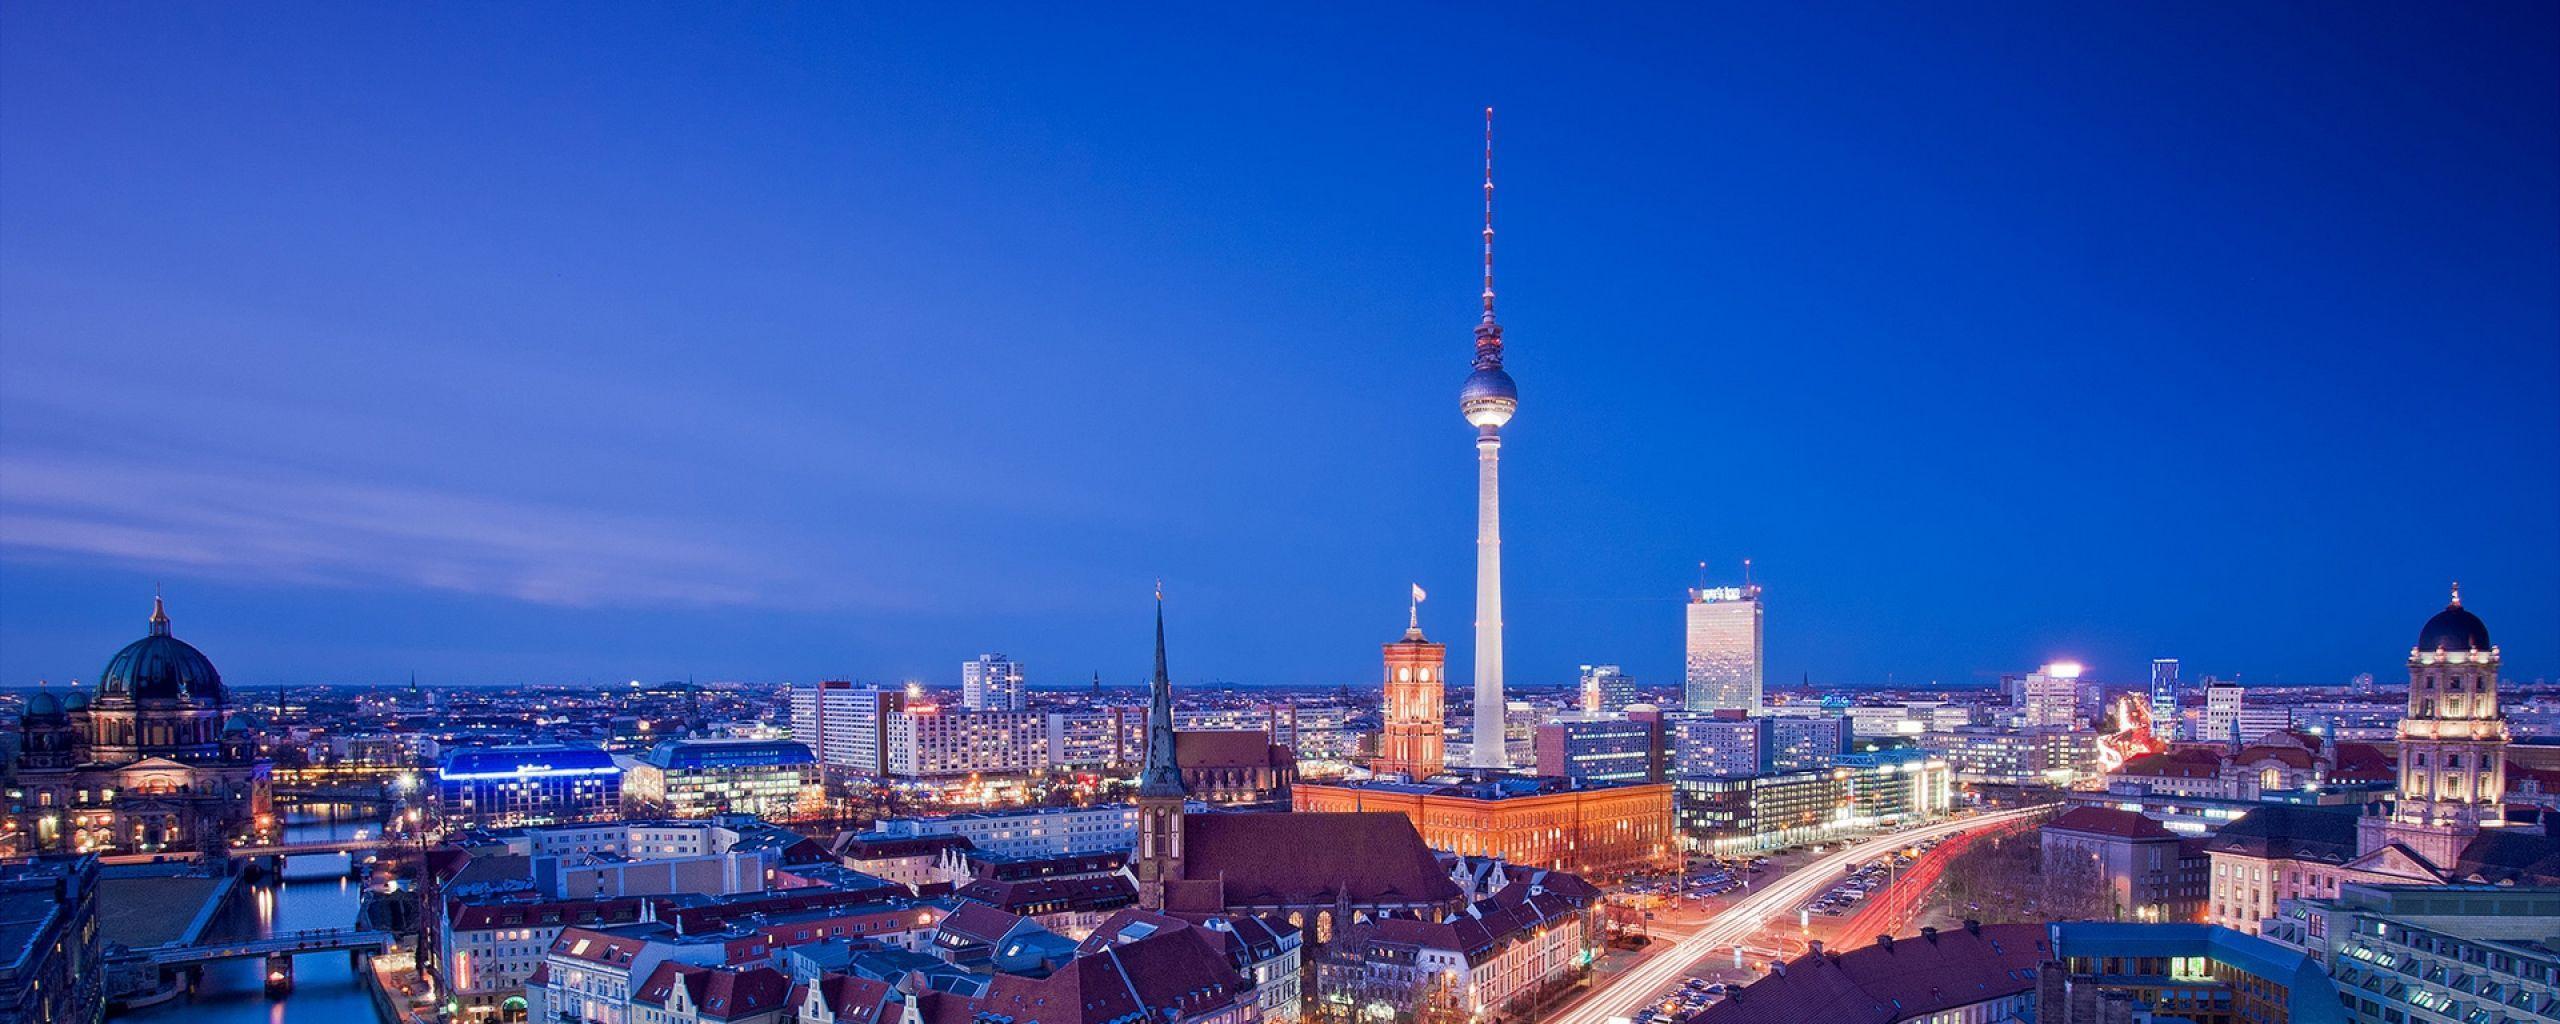 Best Berlin iPhone HD Wallpapers - iLikeWallpaper